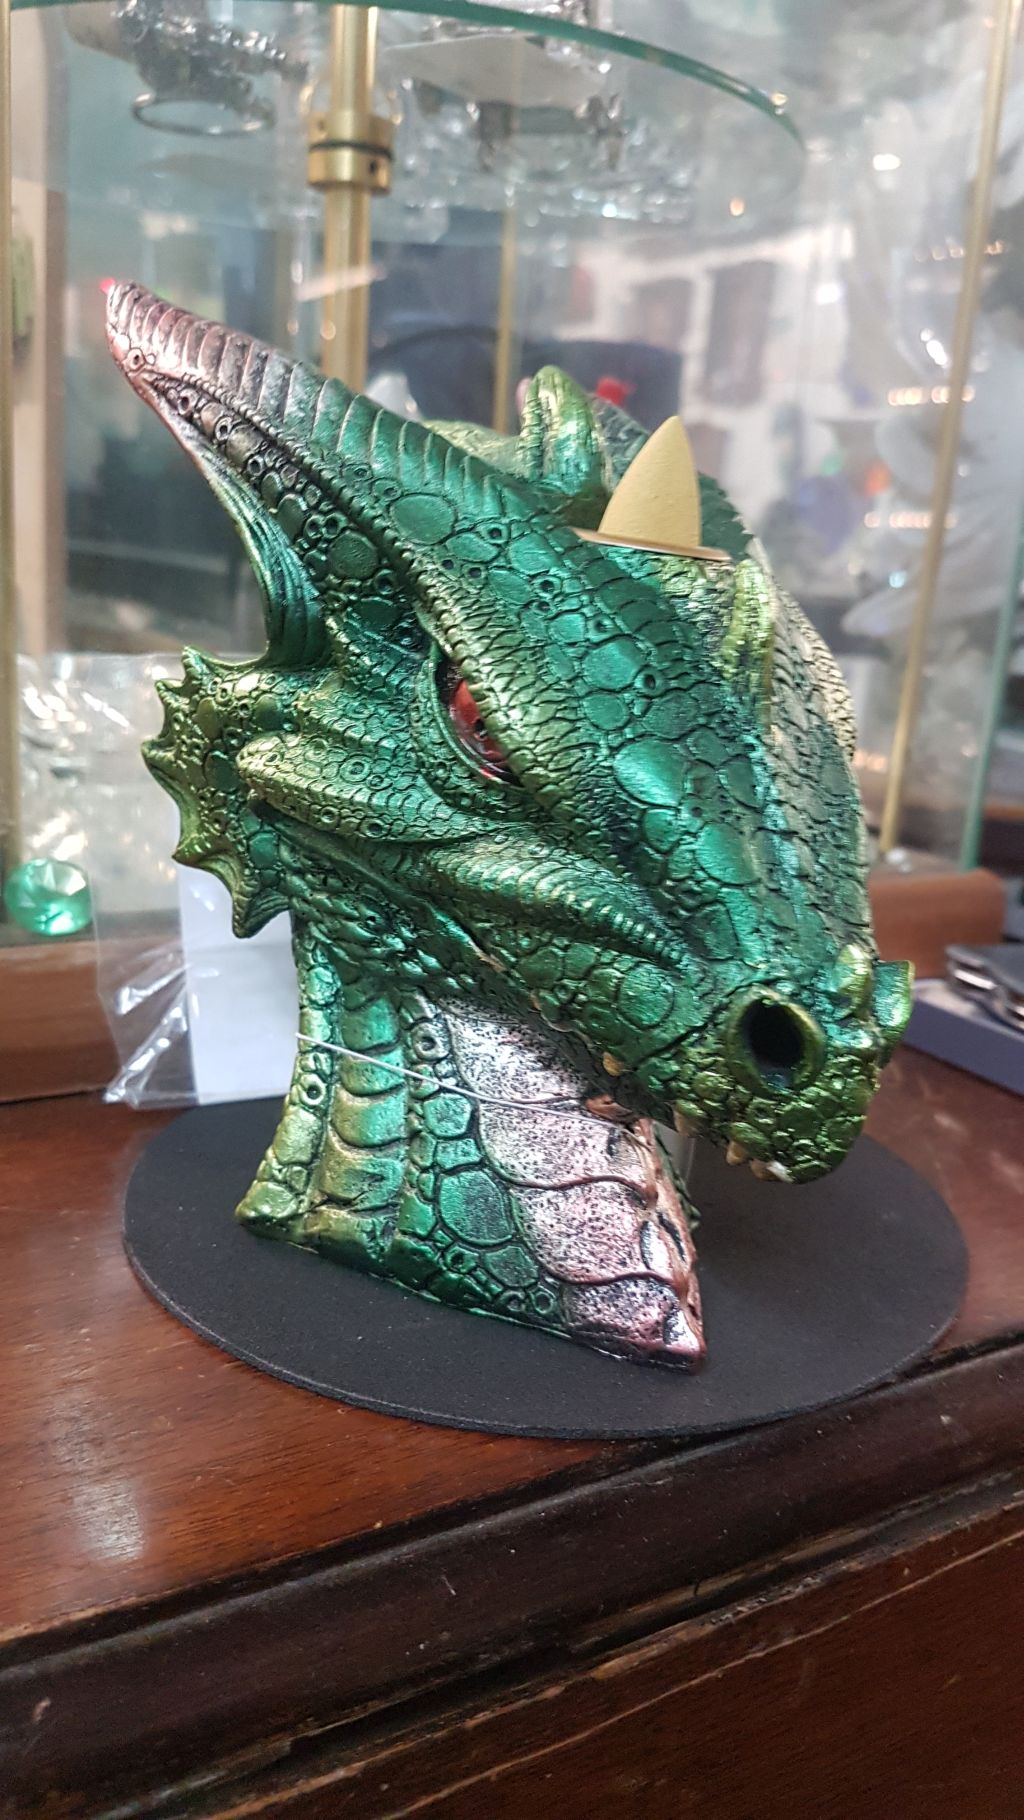 Dragon Head Incense Burner - Great Present